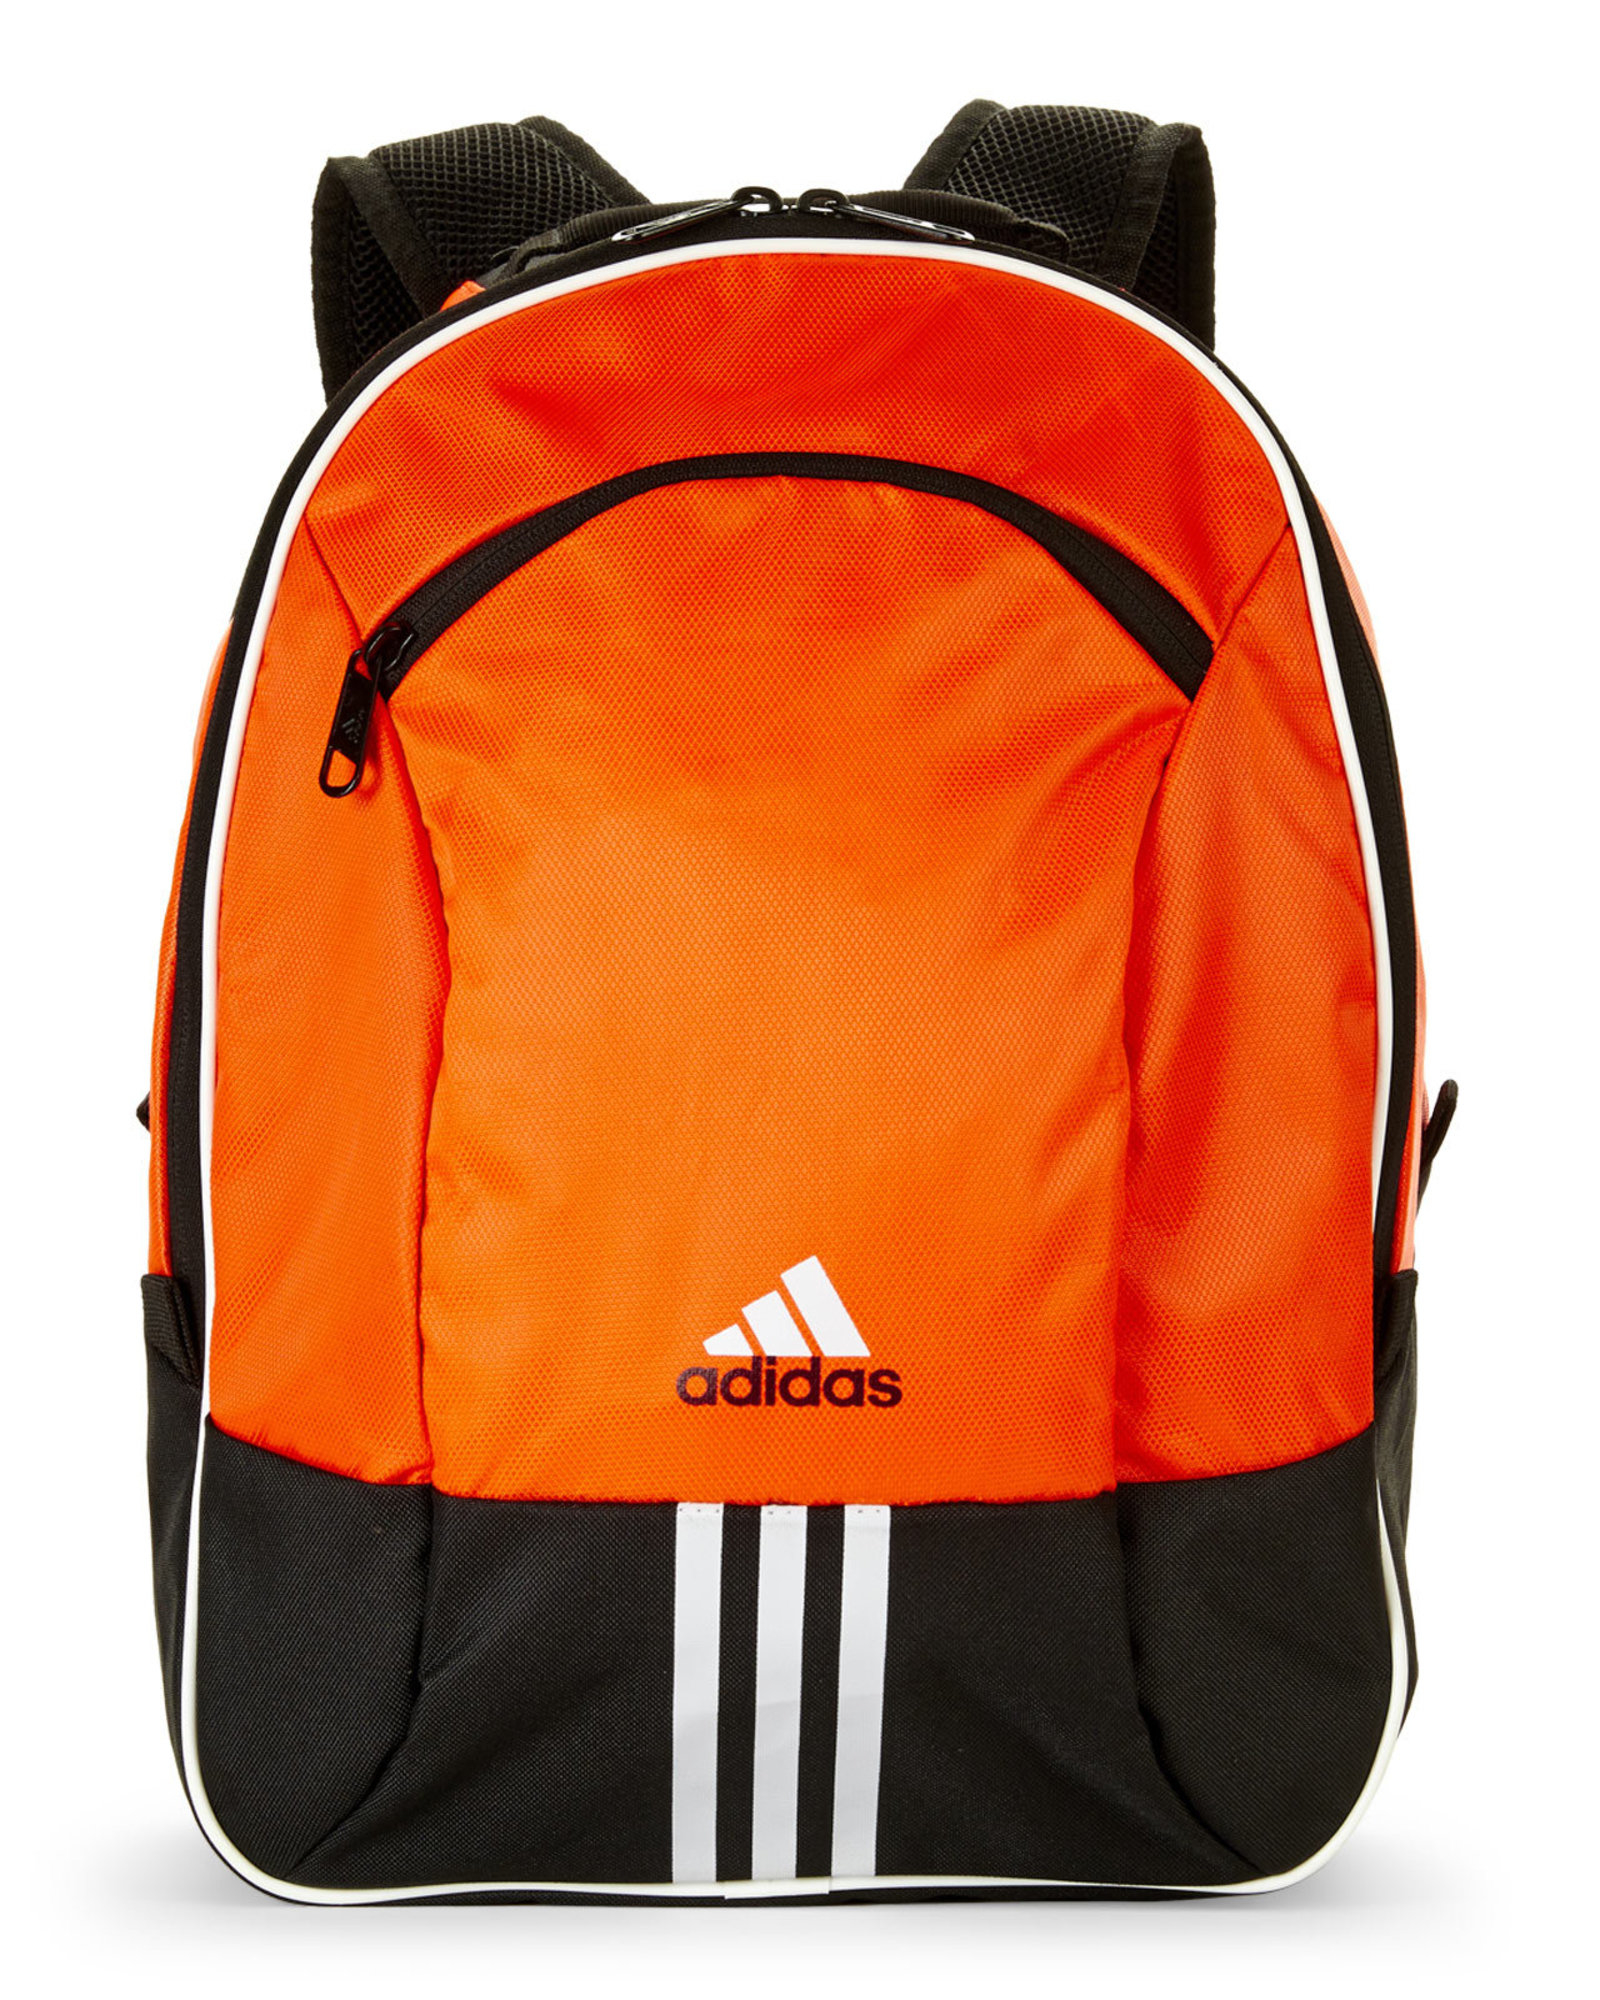 Lyst - Adidas Originals Neon Orange & Black Pincer Backpack in ...